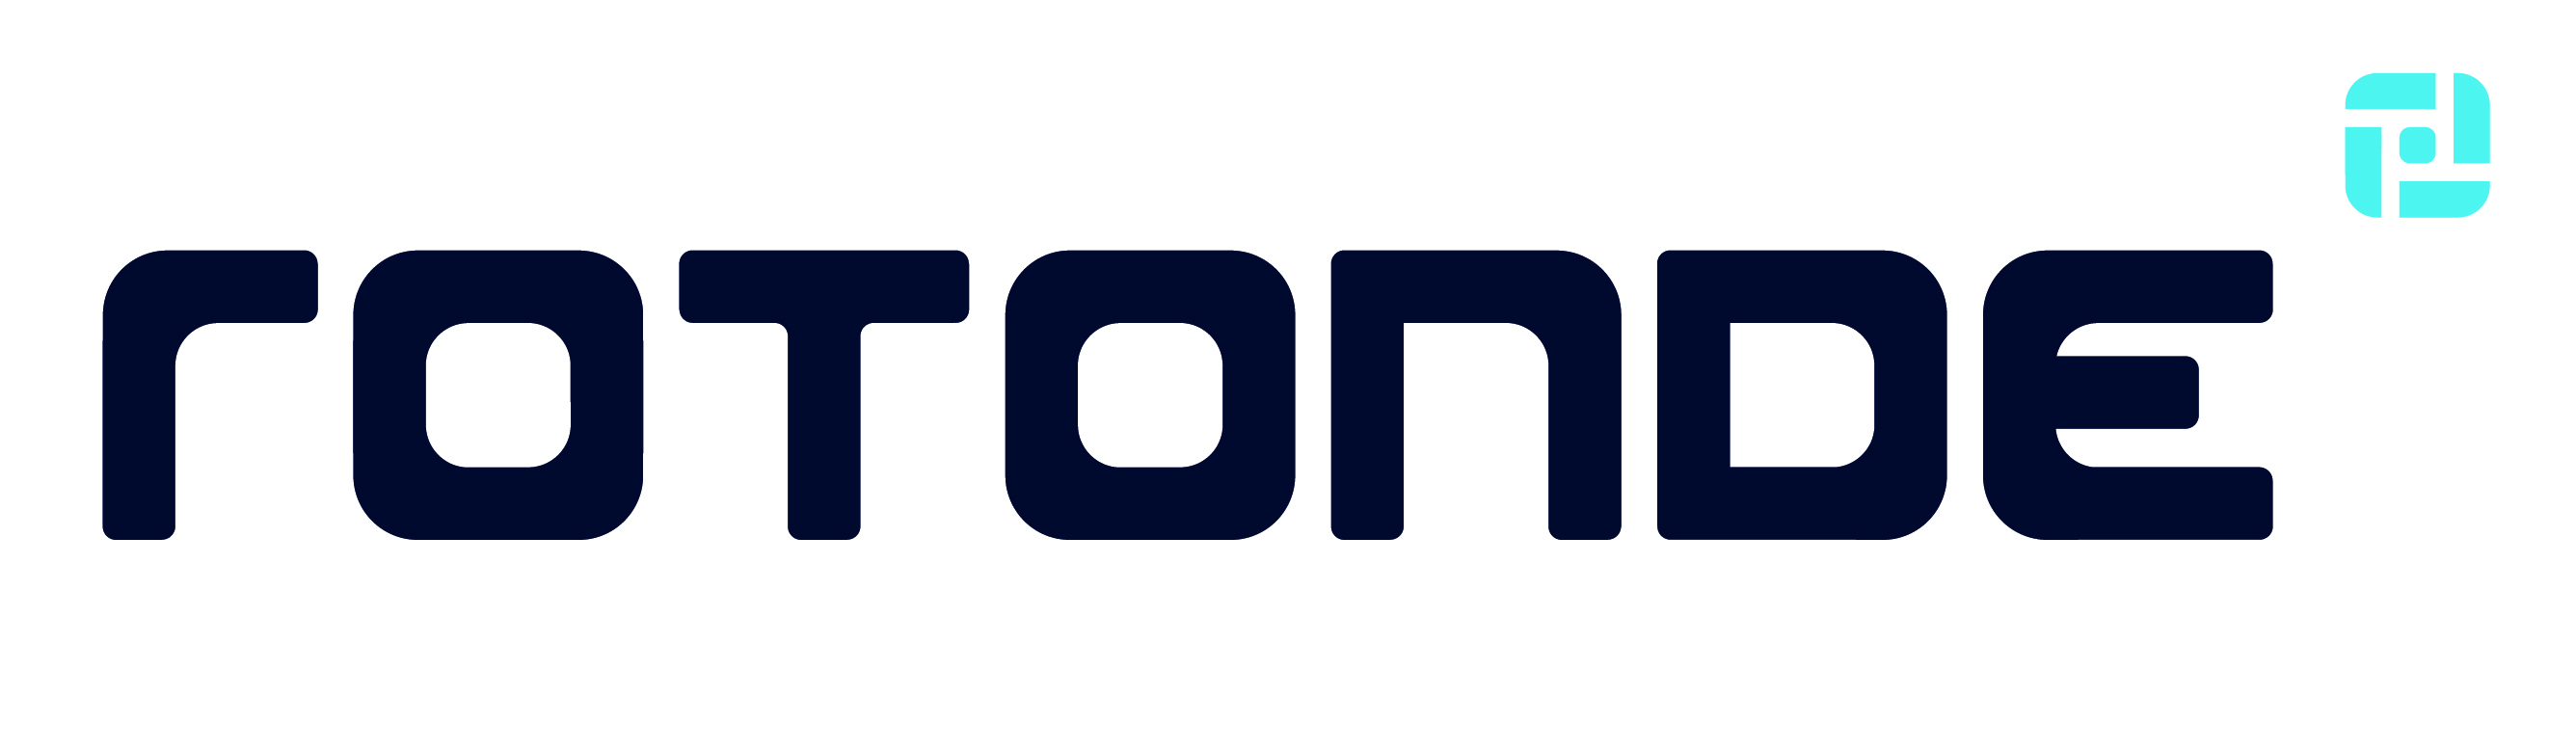 Rotonde logo wit bg